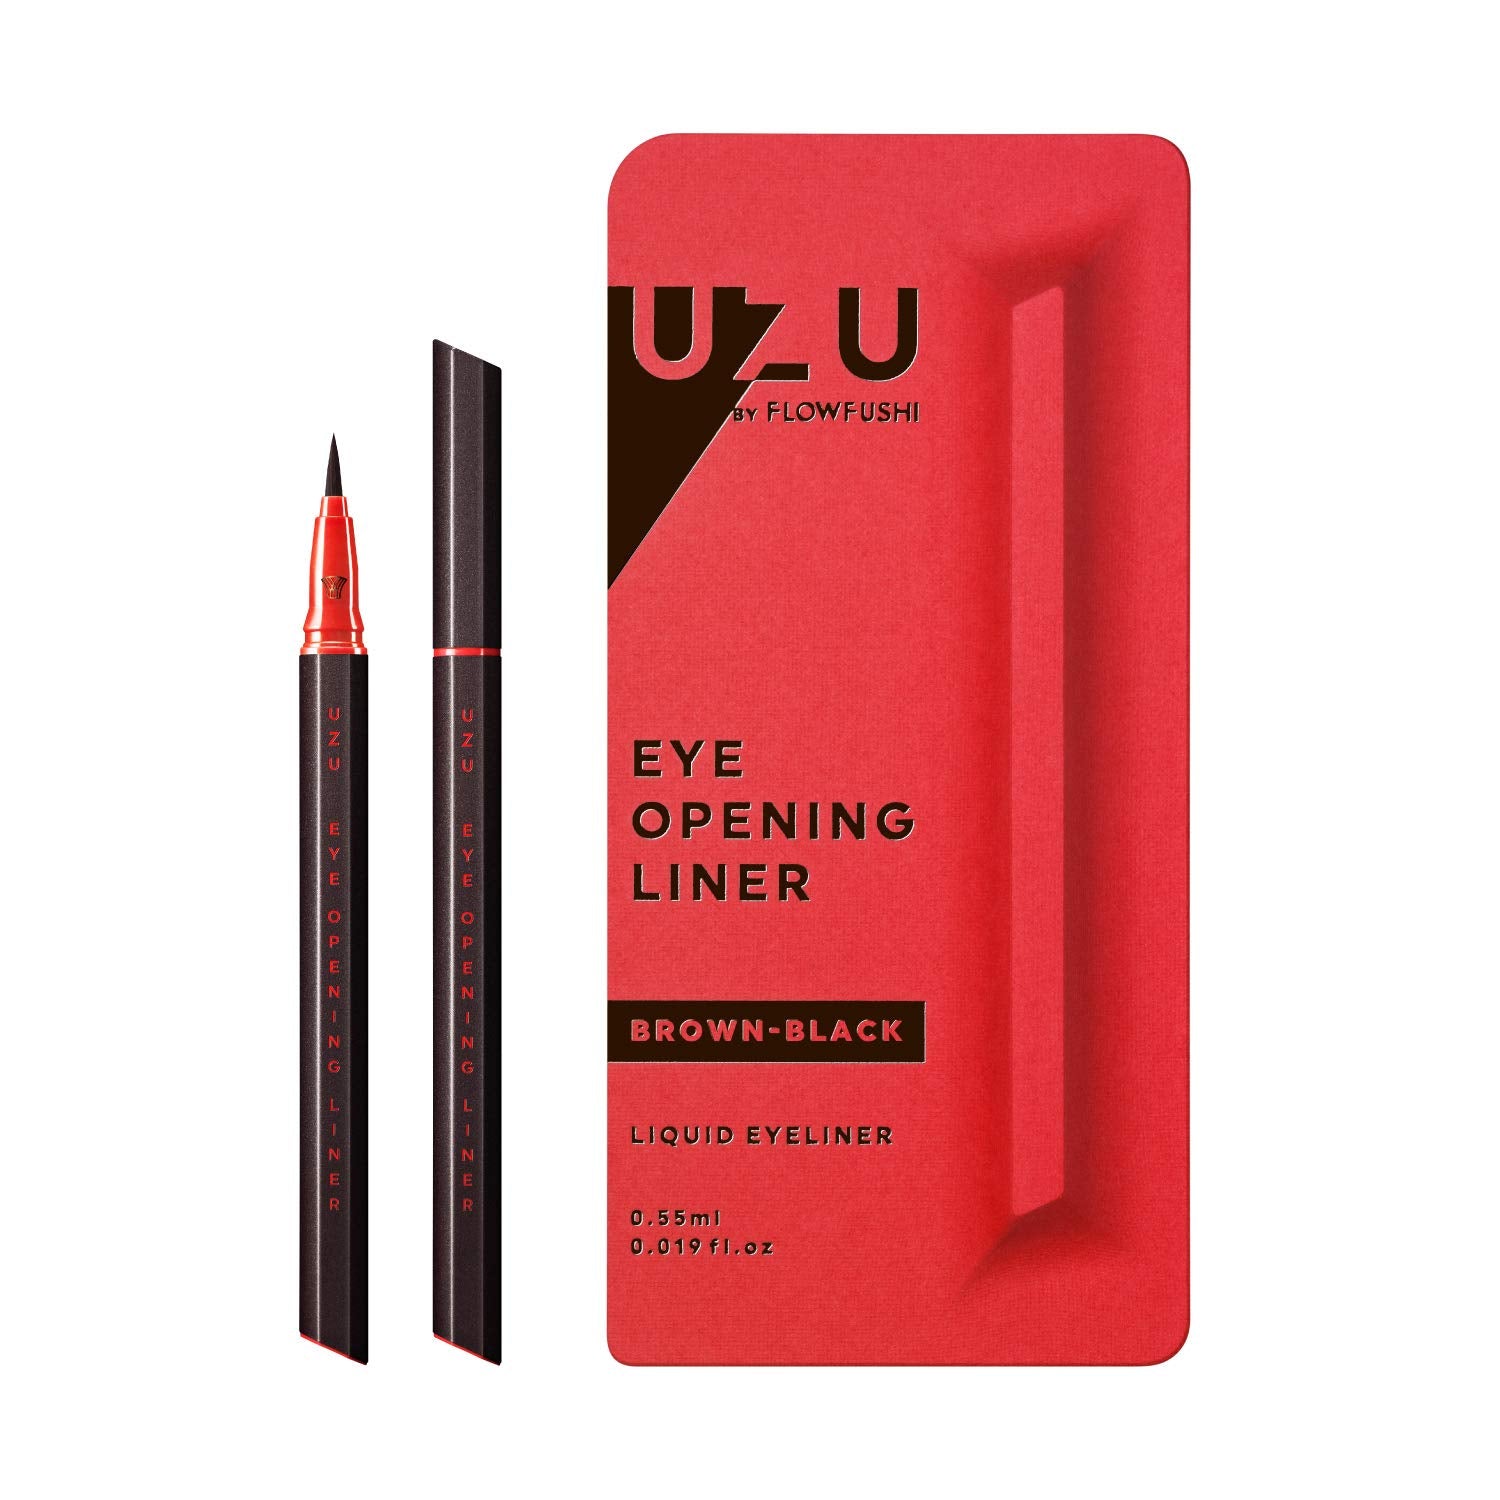 owfushi UZU Eye Opening Liner Liquid Eyeliner (Brown Black)